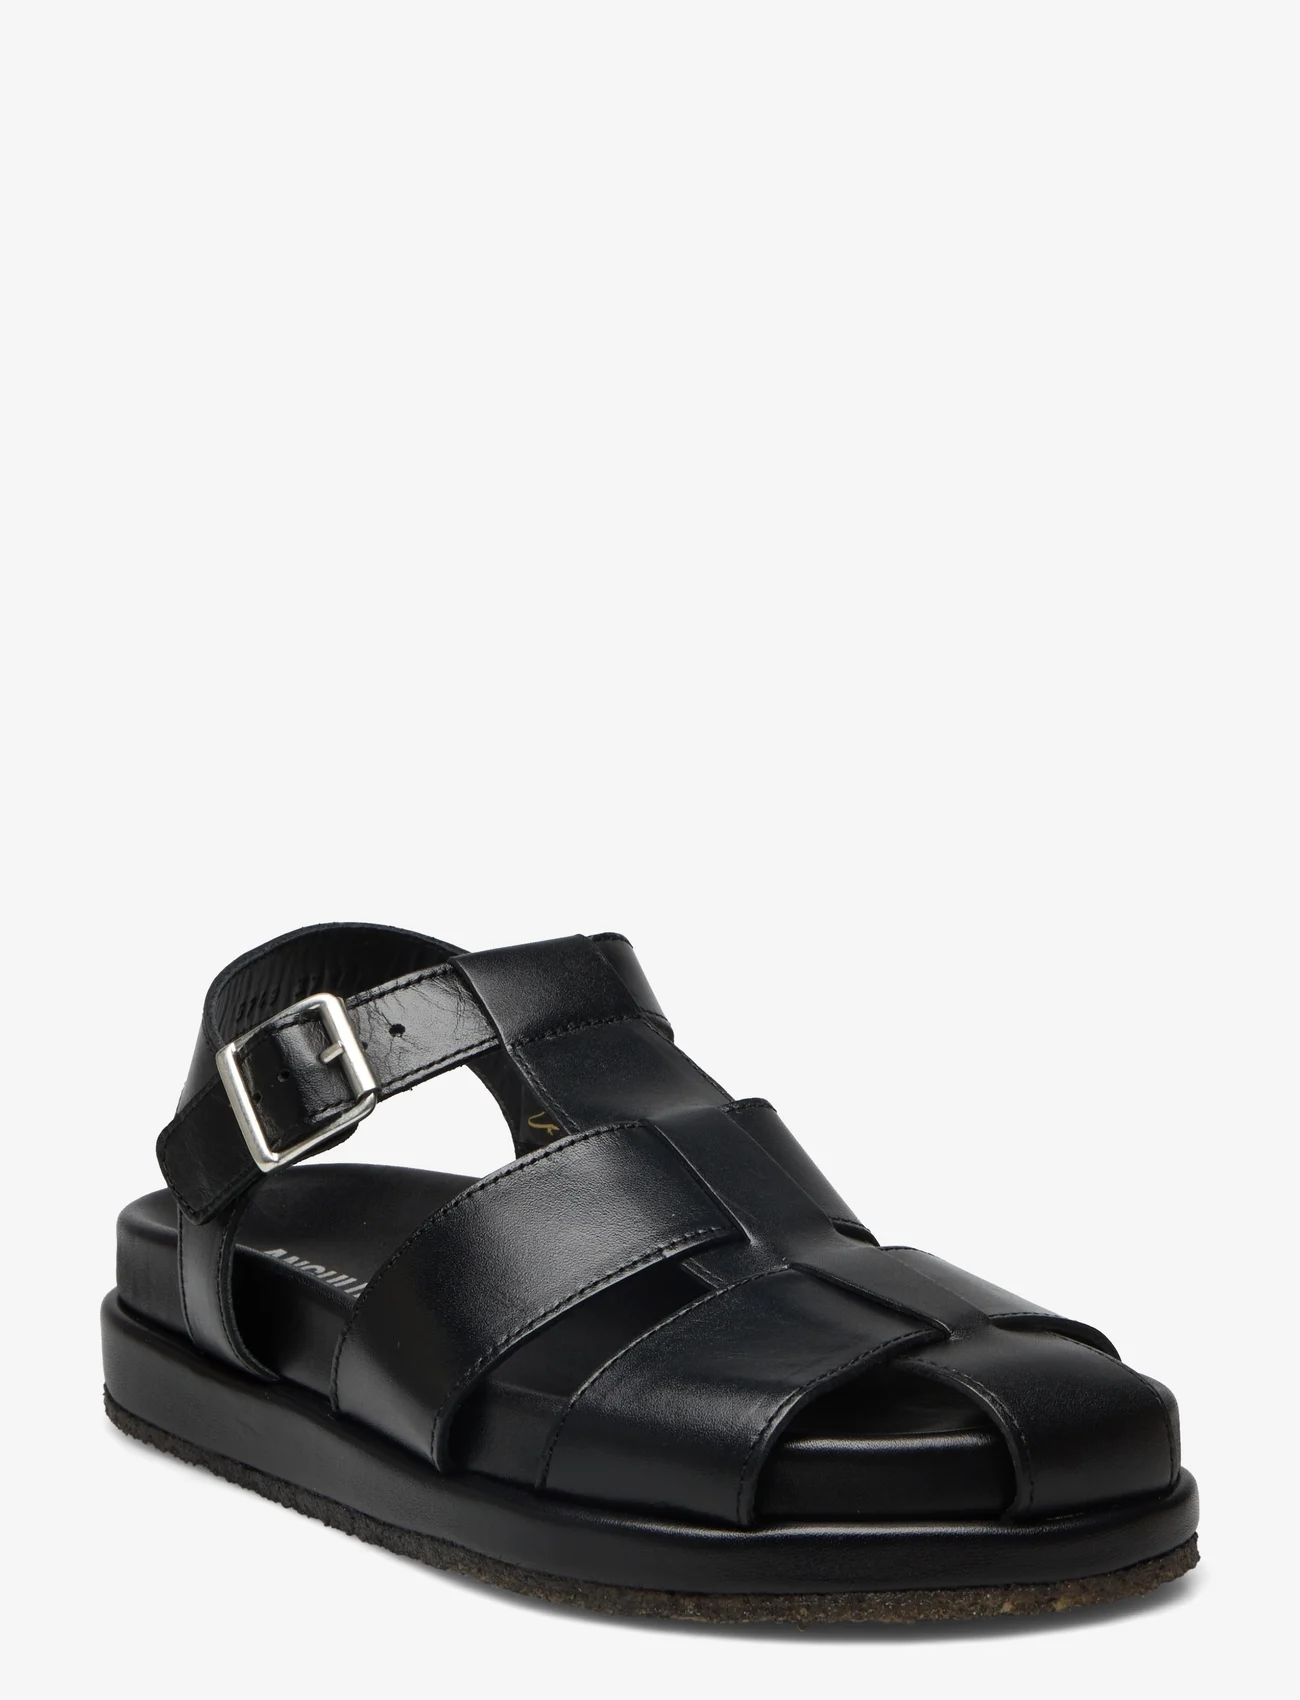 ANGULUS - Sandals - flat - open toe - op - flat sandals - 1604/1785 black - 0